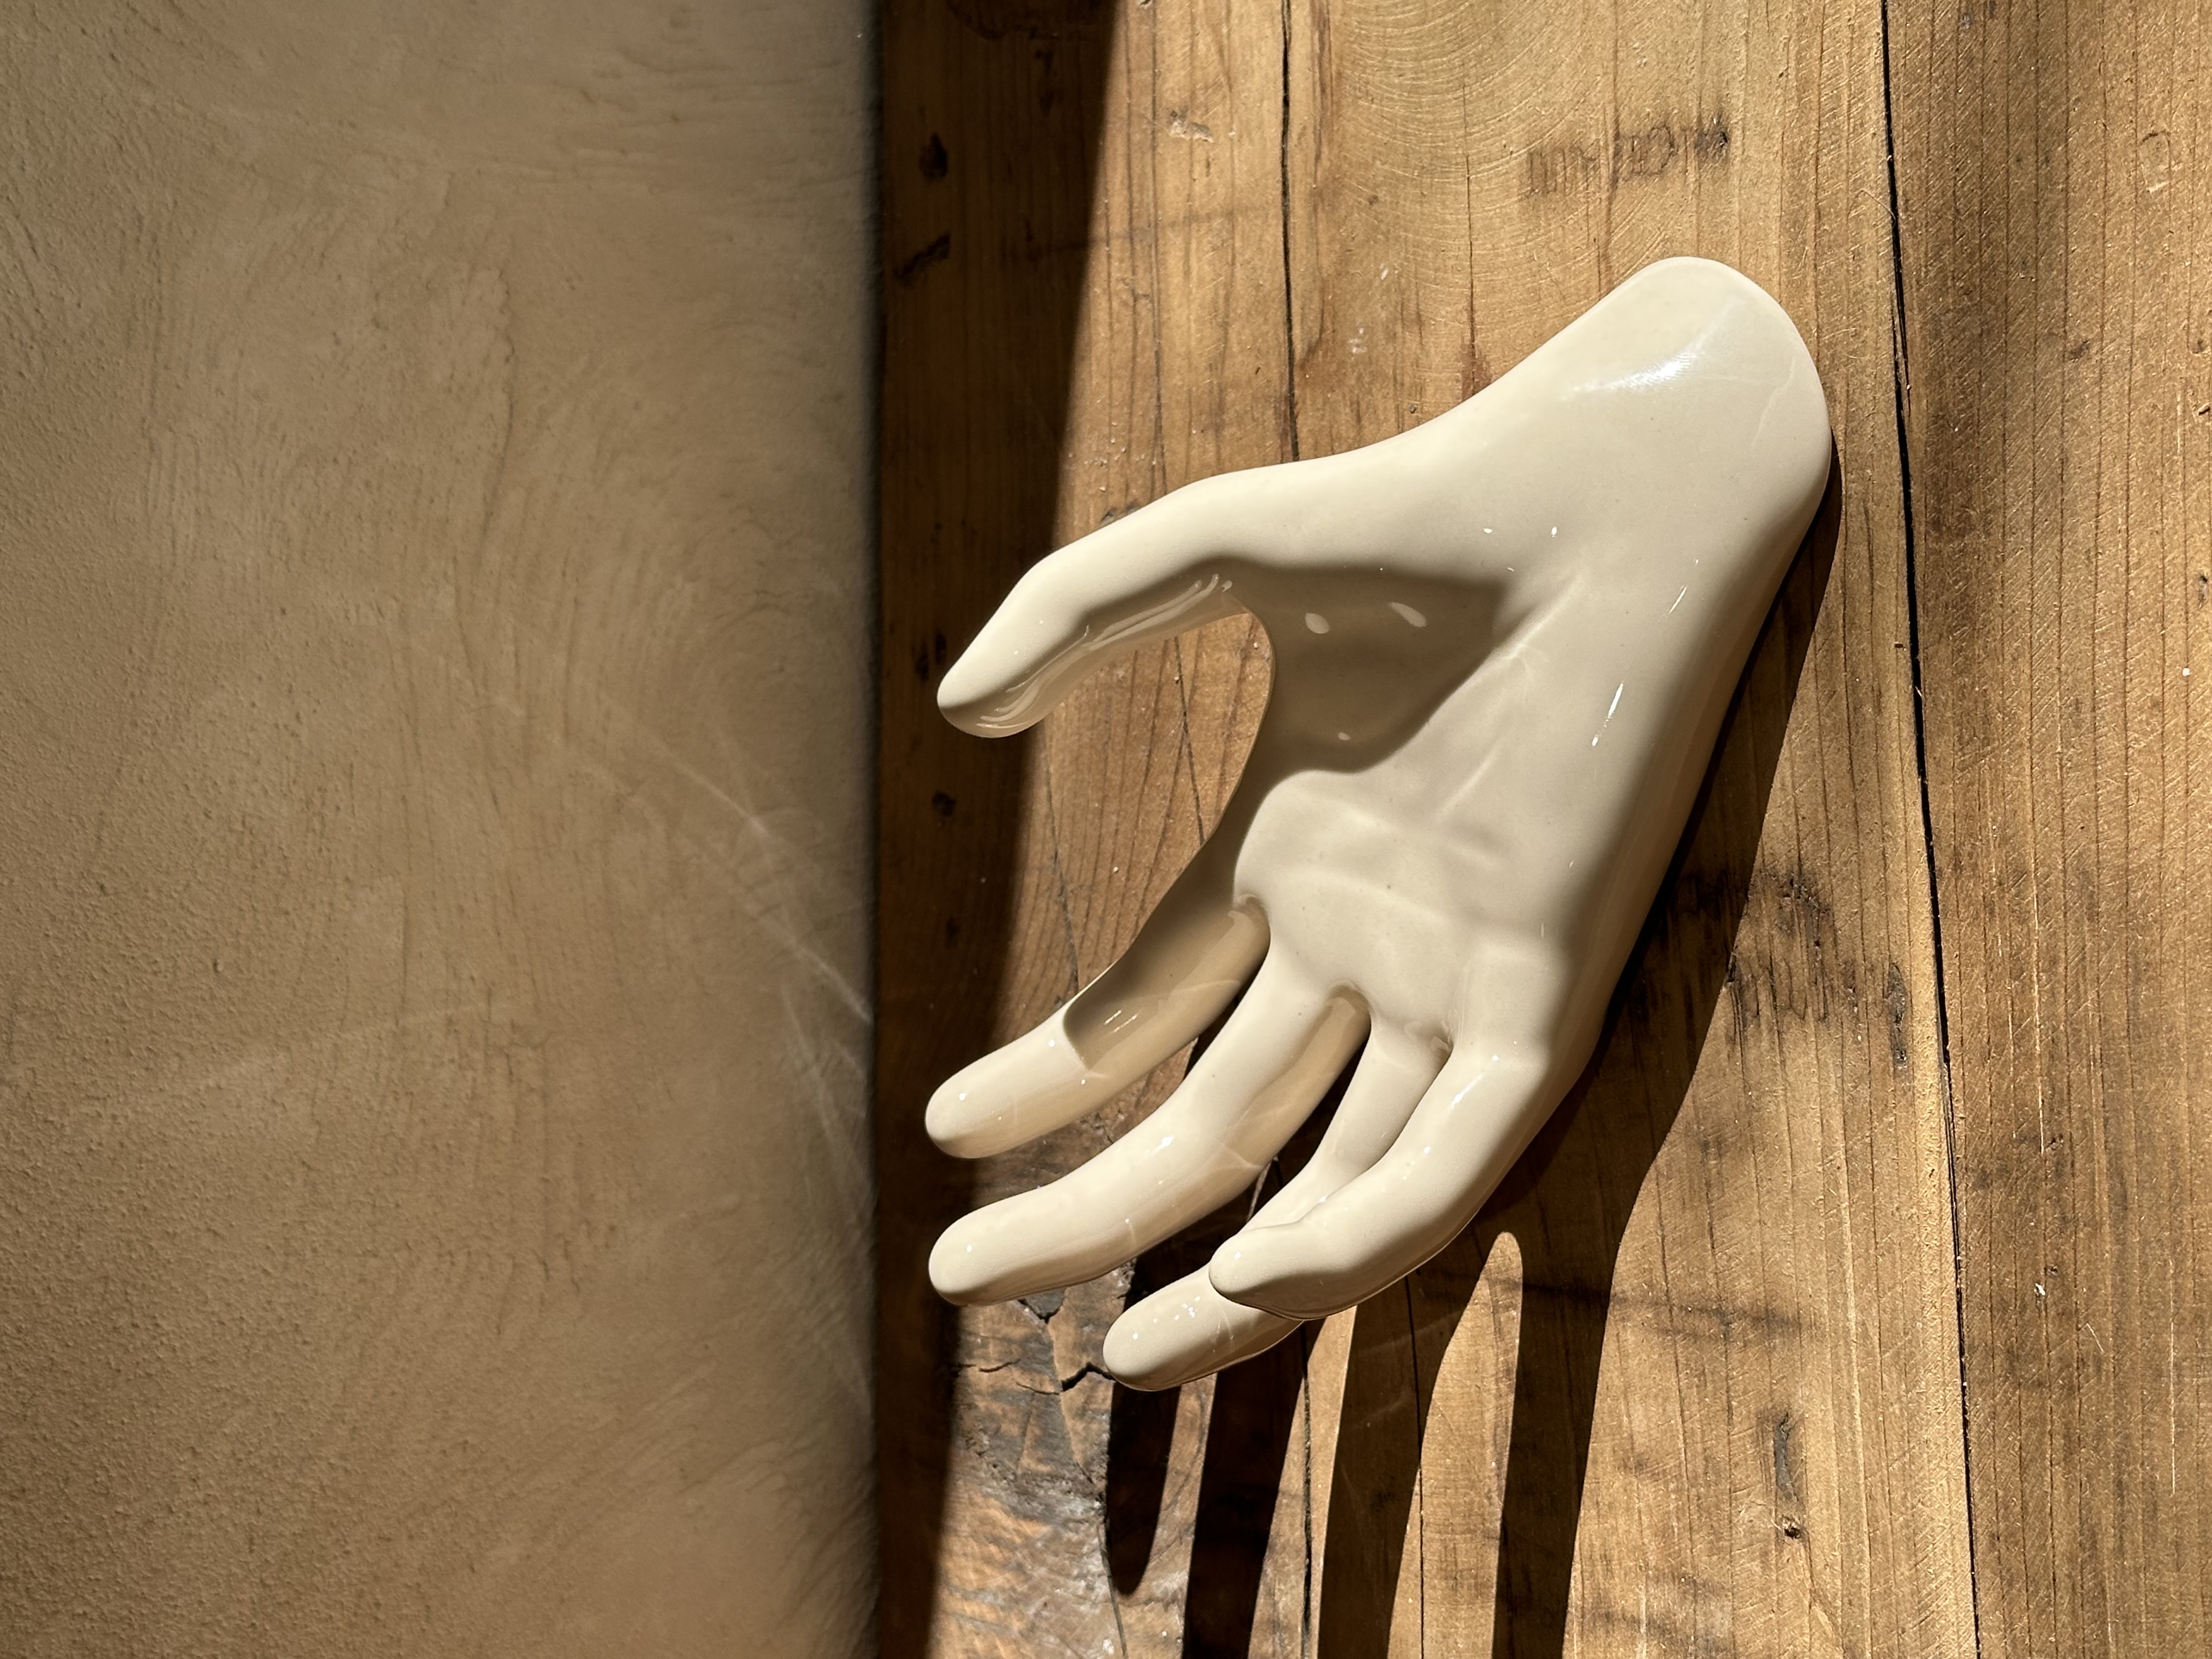 Hand-shaped object